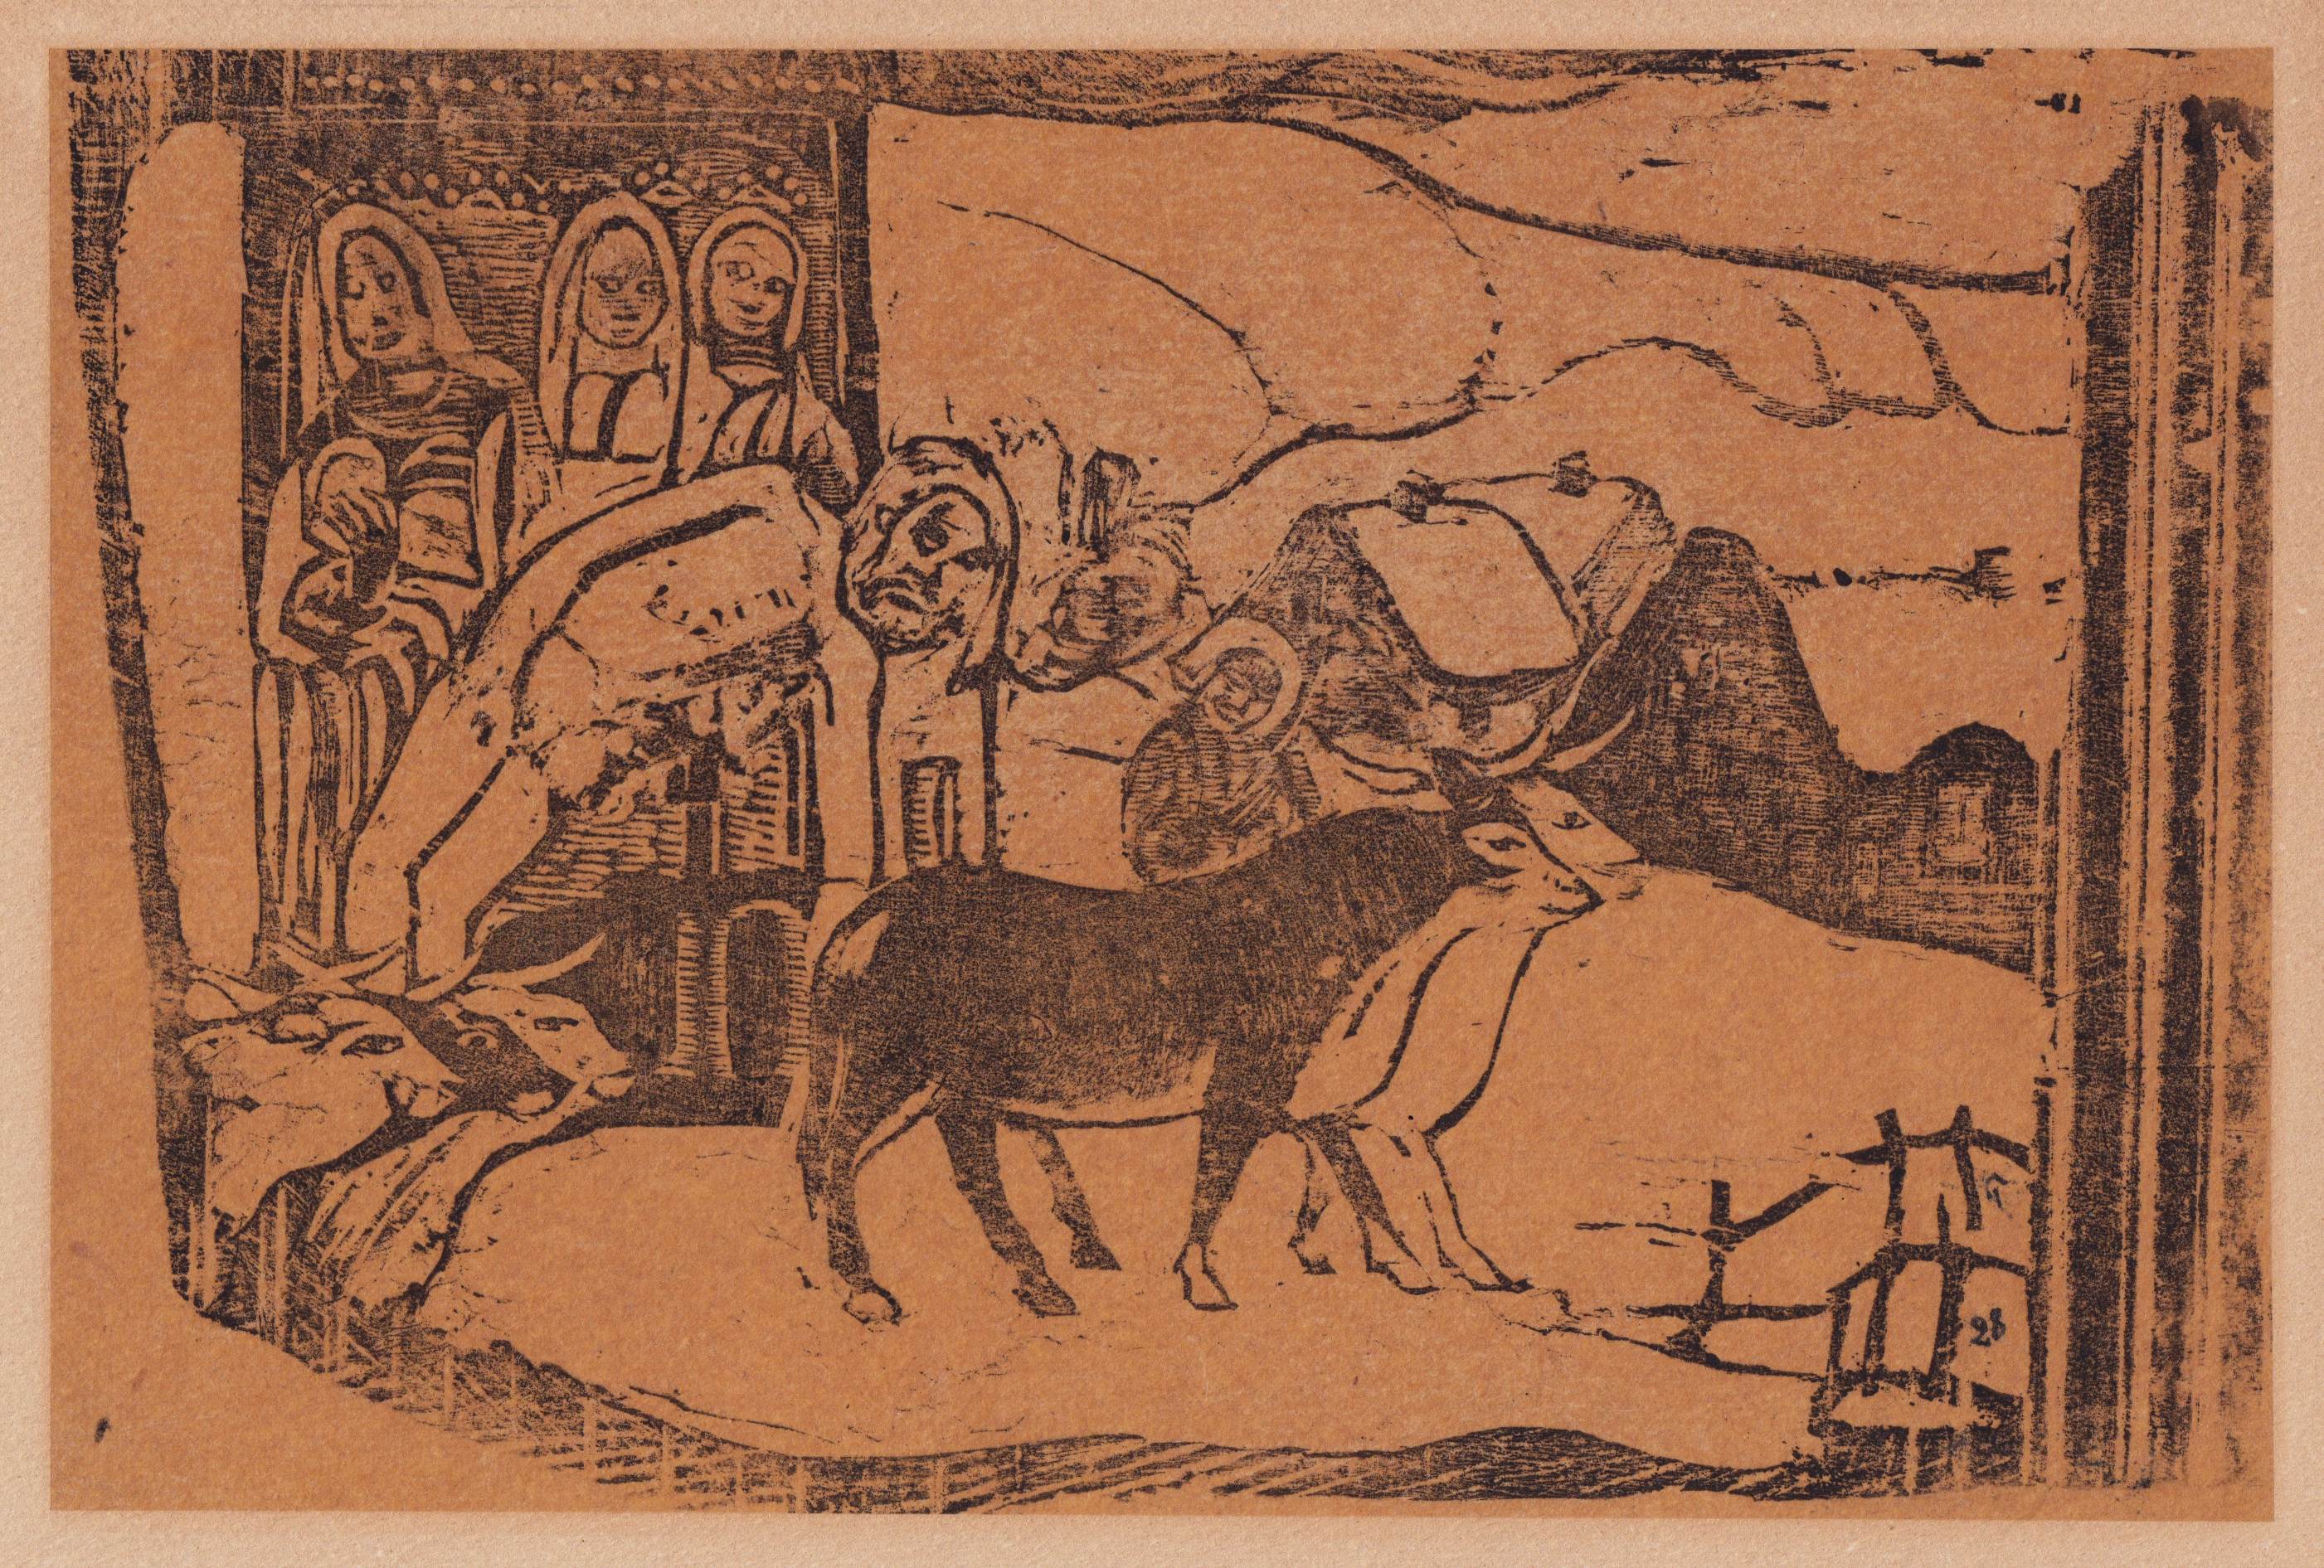 Paul Gauguin, Le Calvaire Breton, 1898-99, woodcut with ochre toning